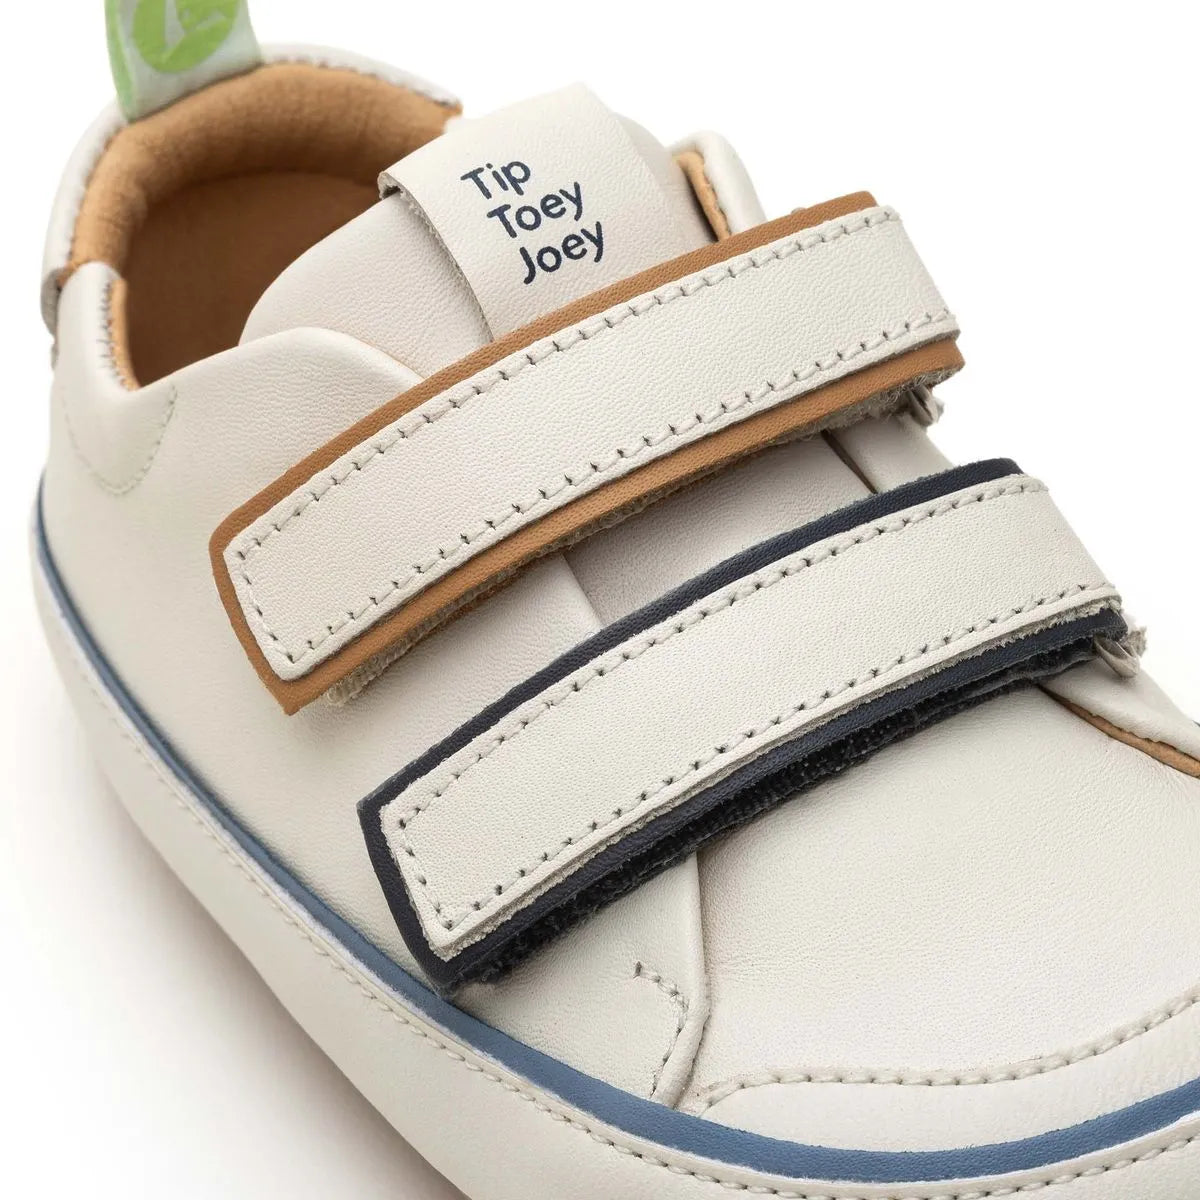 Tip Toey Joey - Bossy Colors Tapioca Sneakers